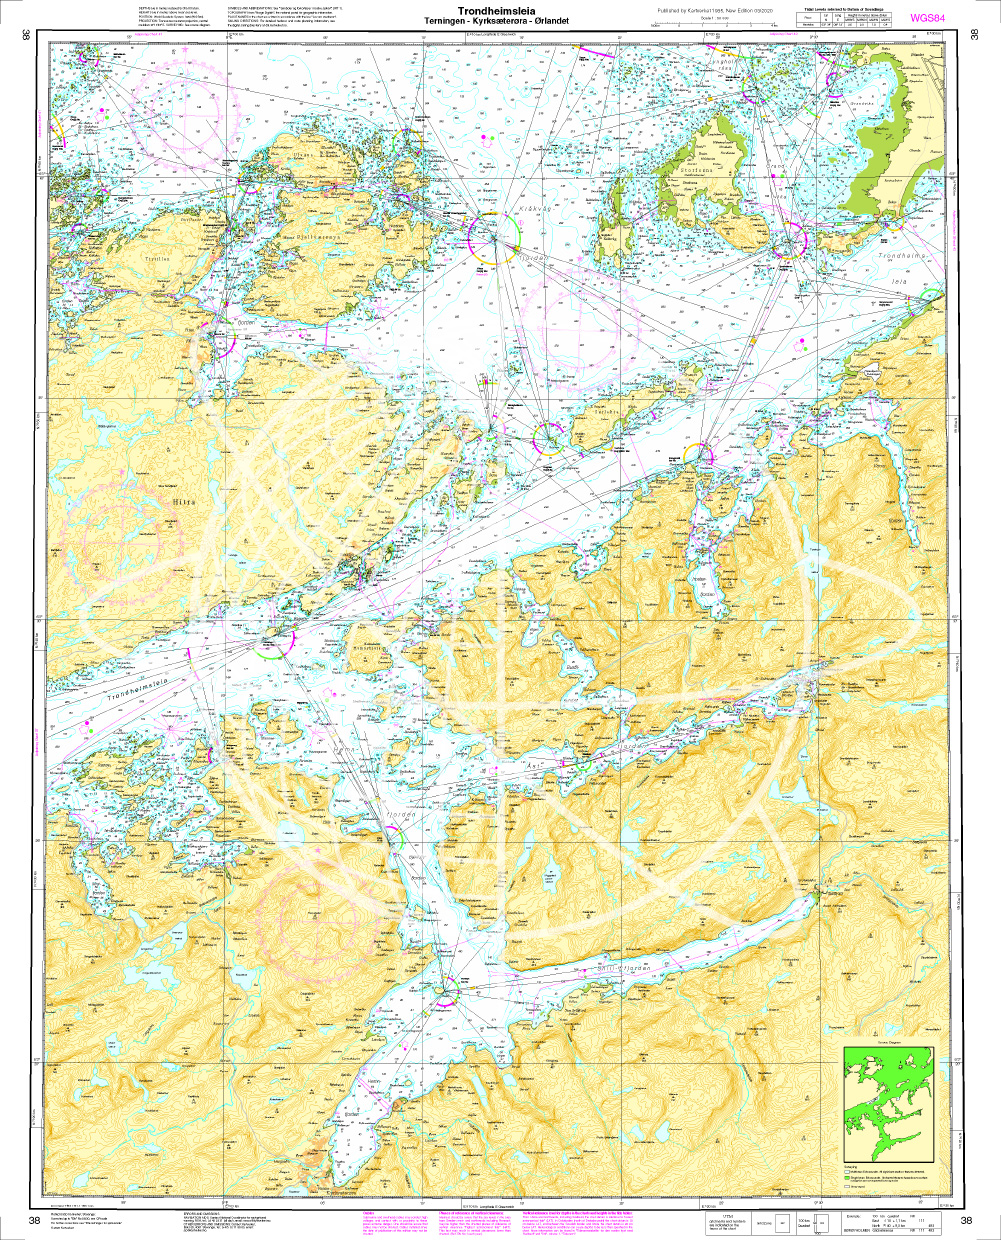 Norwegen 39 Atlantik Trondheimsfjord mit  Agdenes - Thamshamn - Buvika